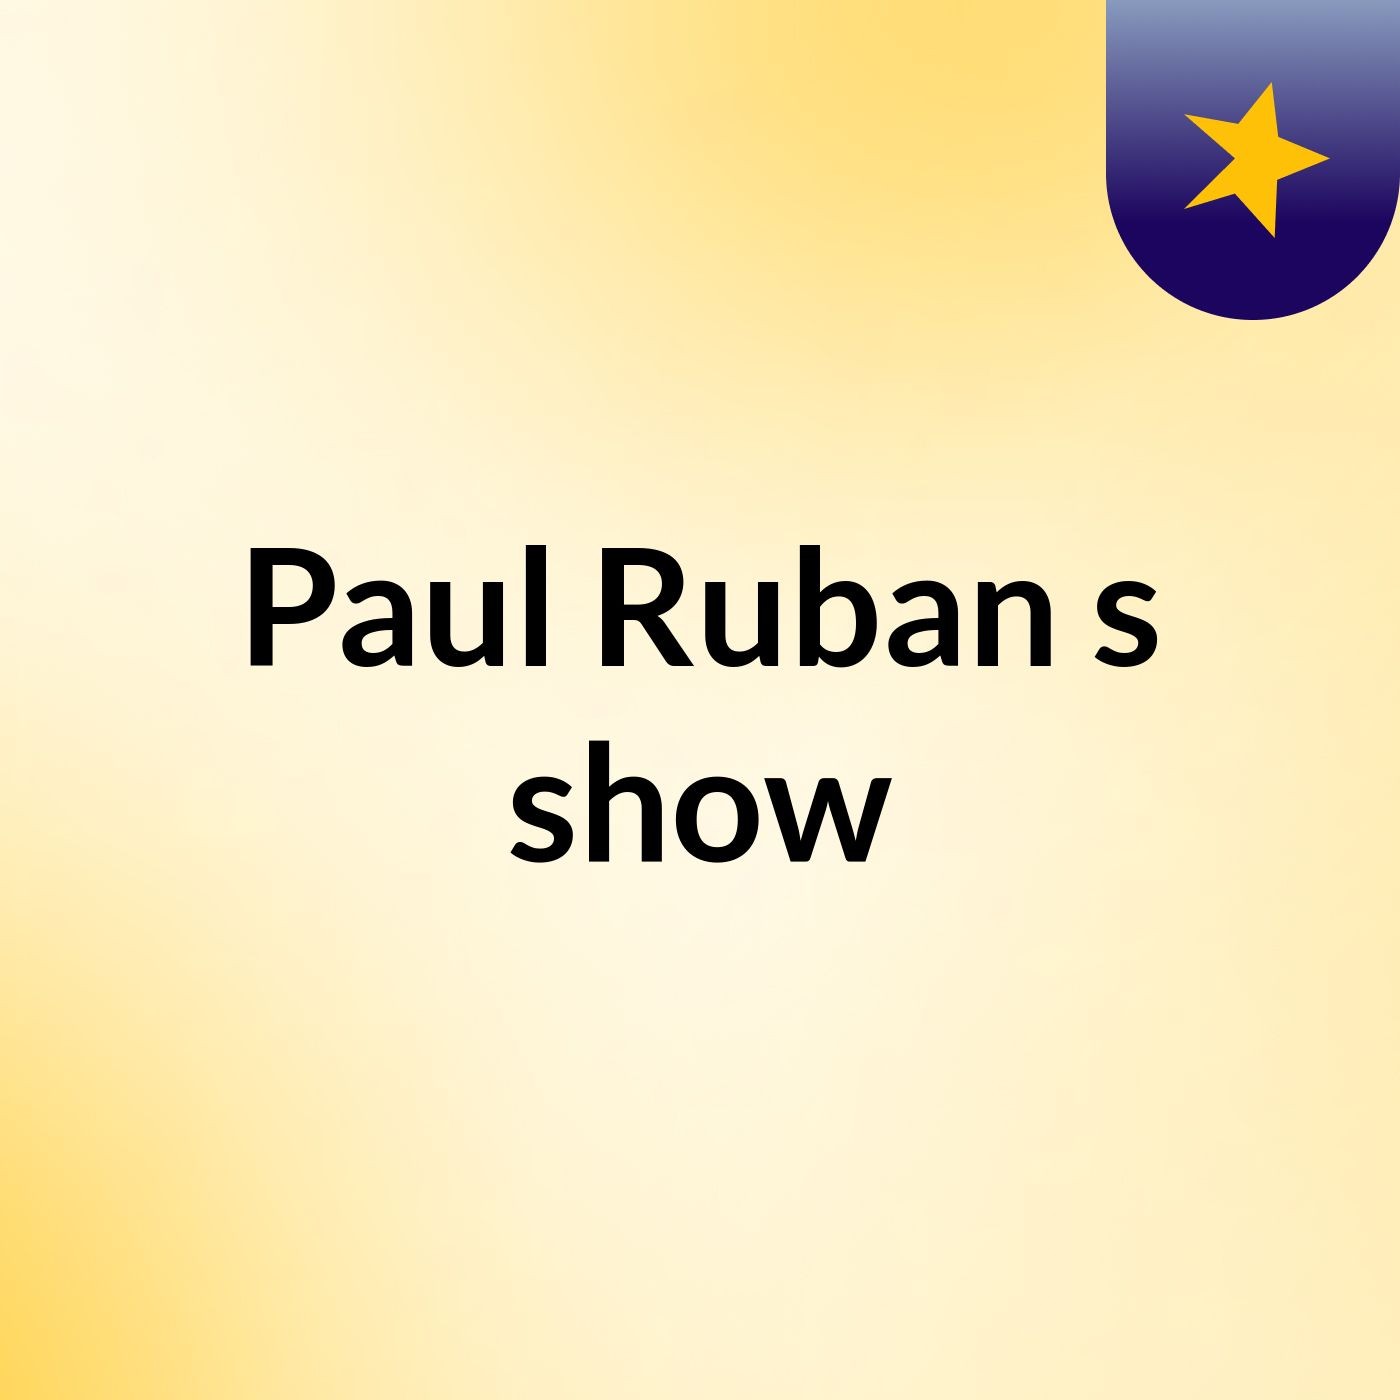 Paul Ruban's show